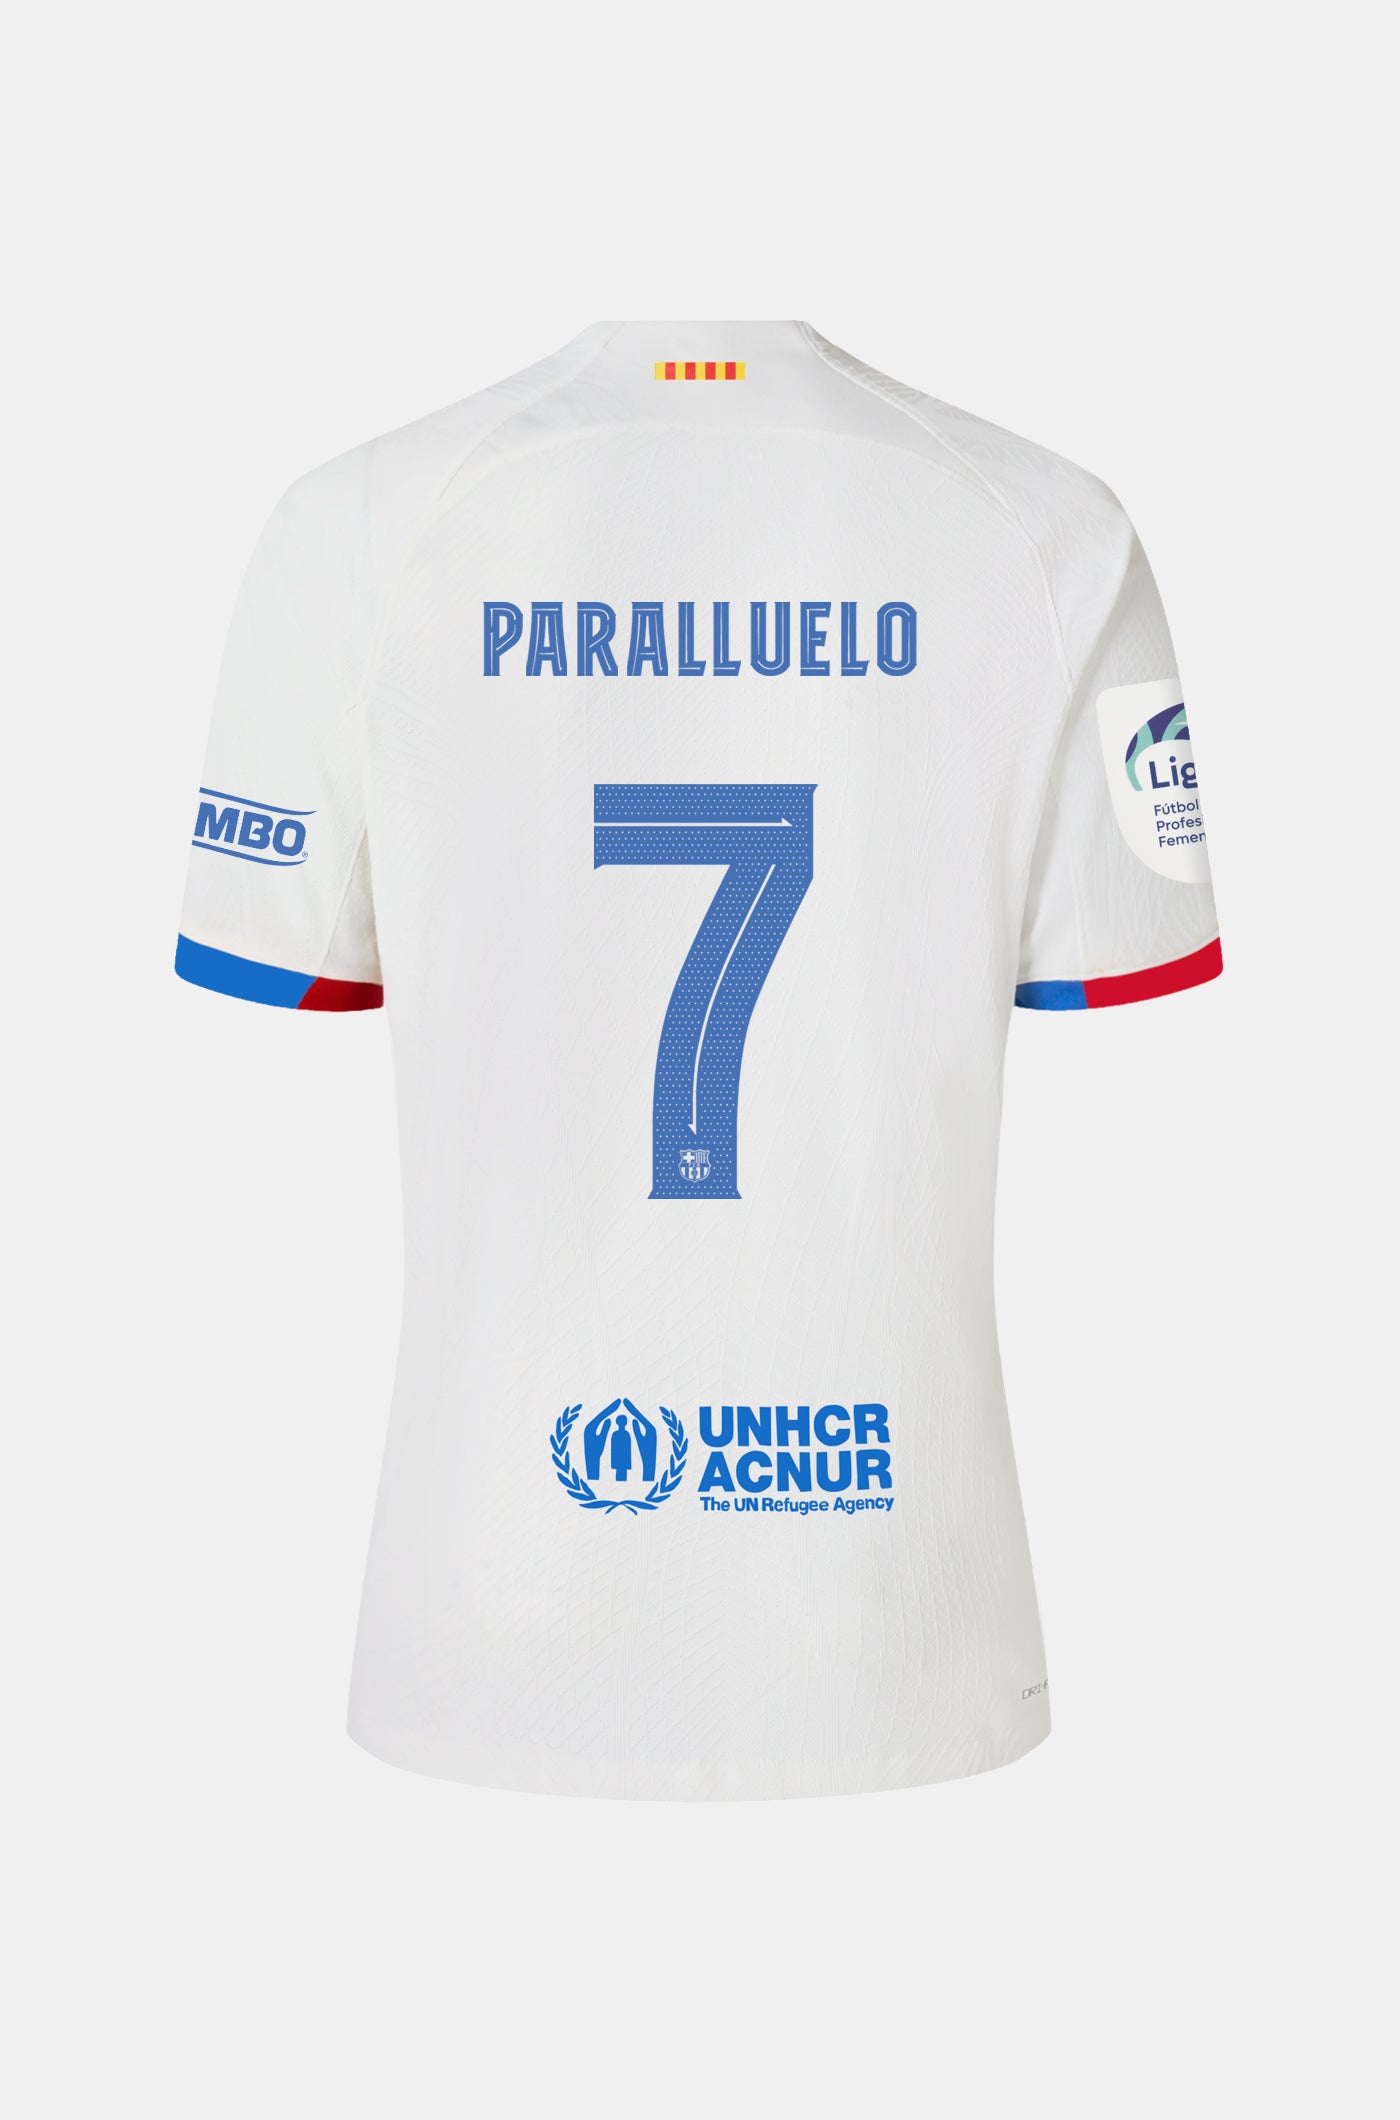 Liga F FC Barcelona Away Shirt 23/24 Player’s Edition - Women  - PARALLUELO